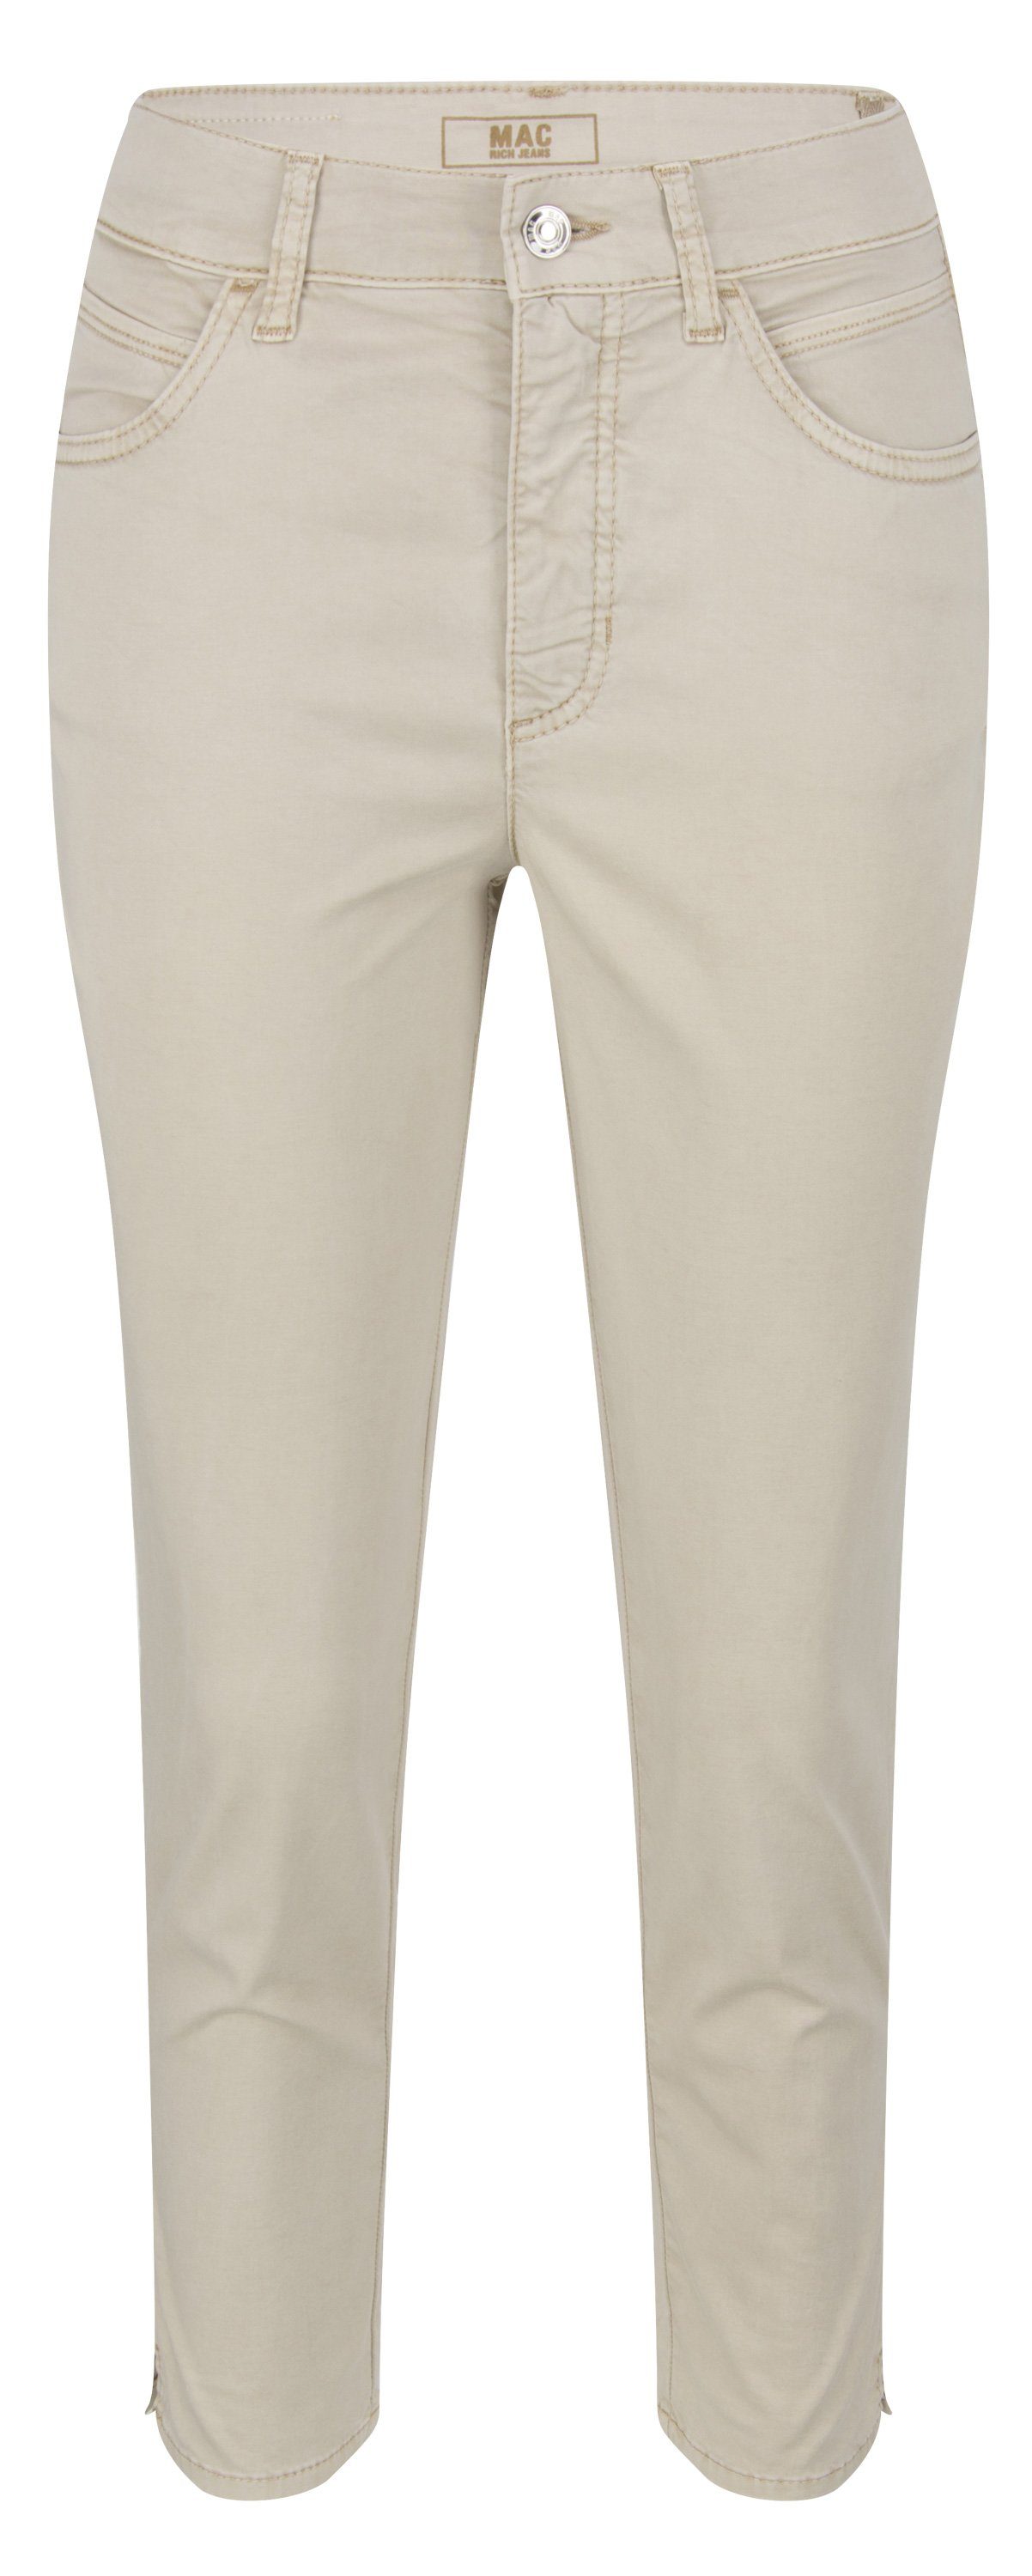 214R MAC Stretch-Jeans 5015-00-0430 smoothly MAC 7/8 beige MELANIE PPT